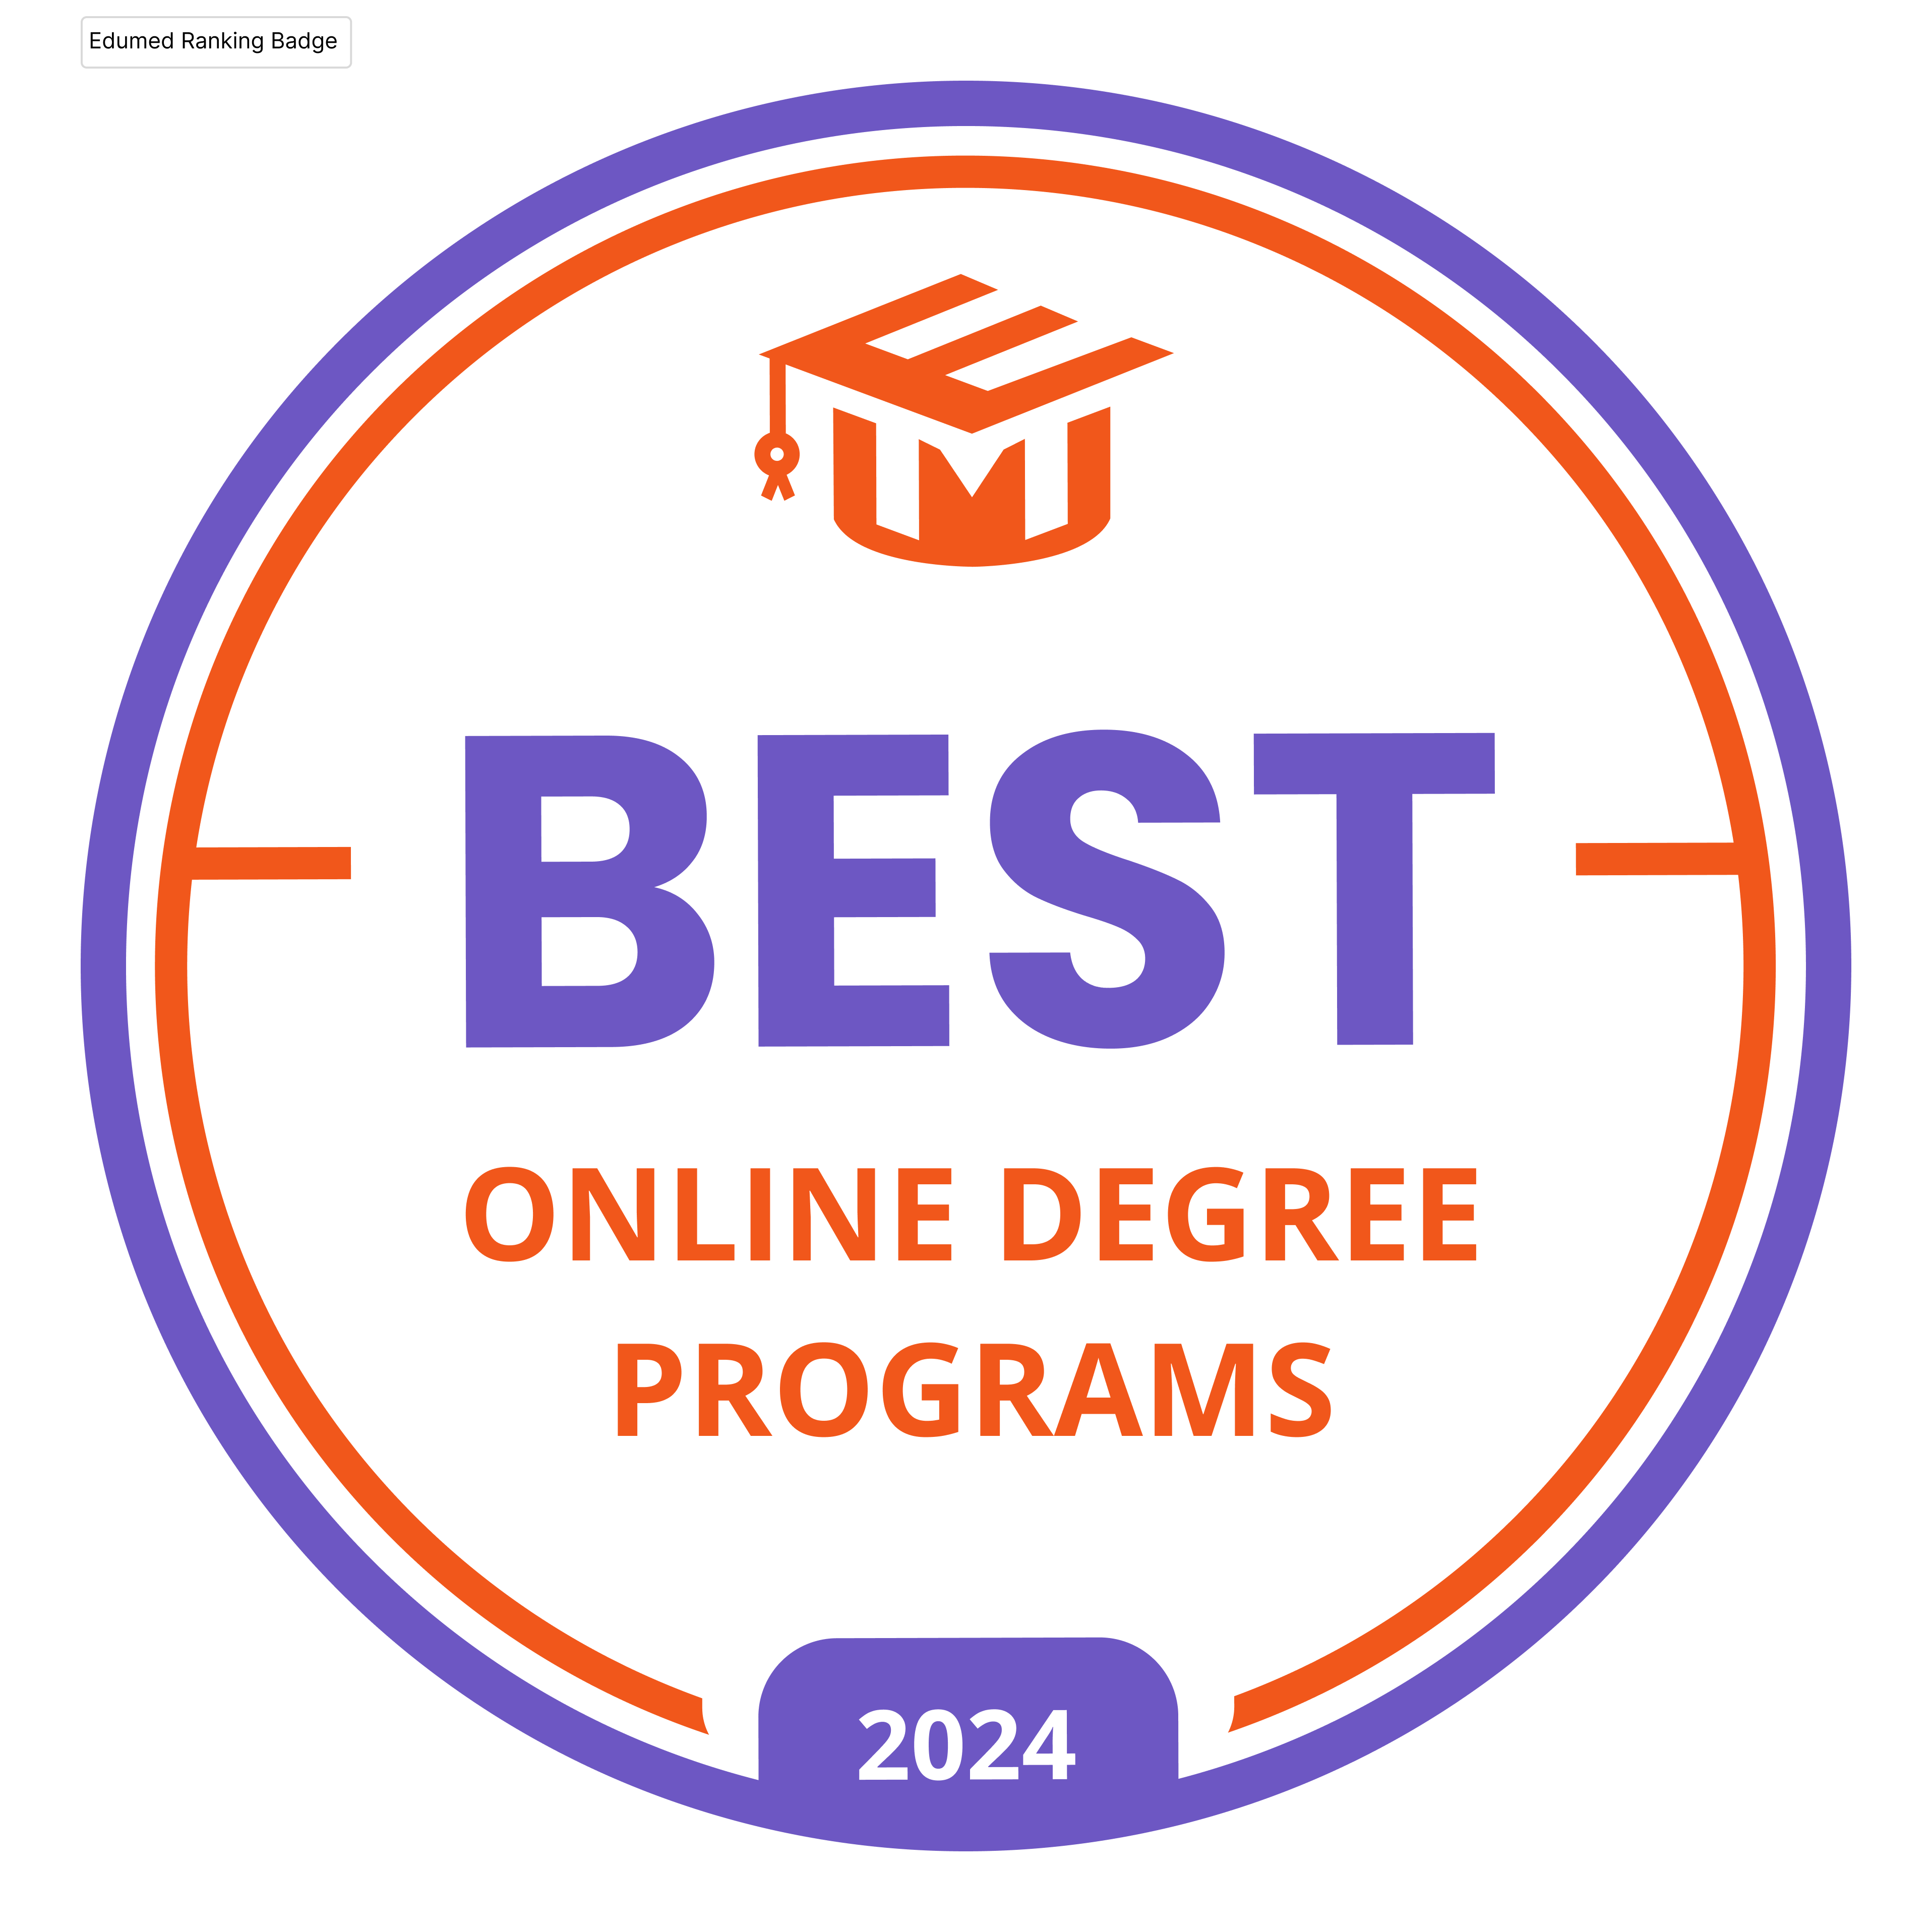 EduMed Best Online Degree Programs 2024 Badge